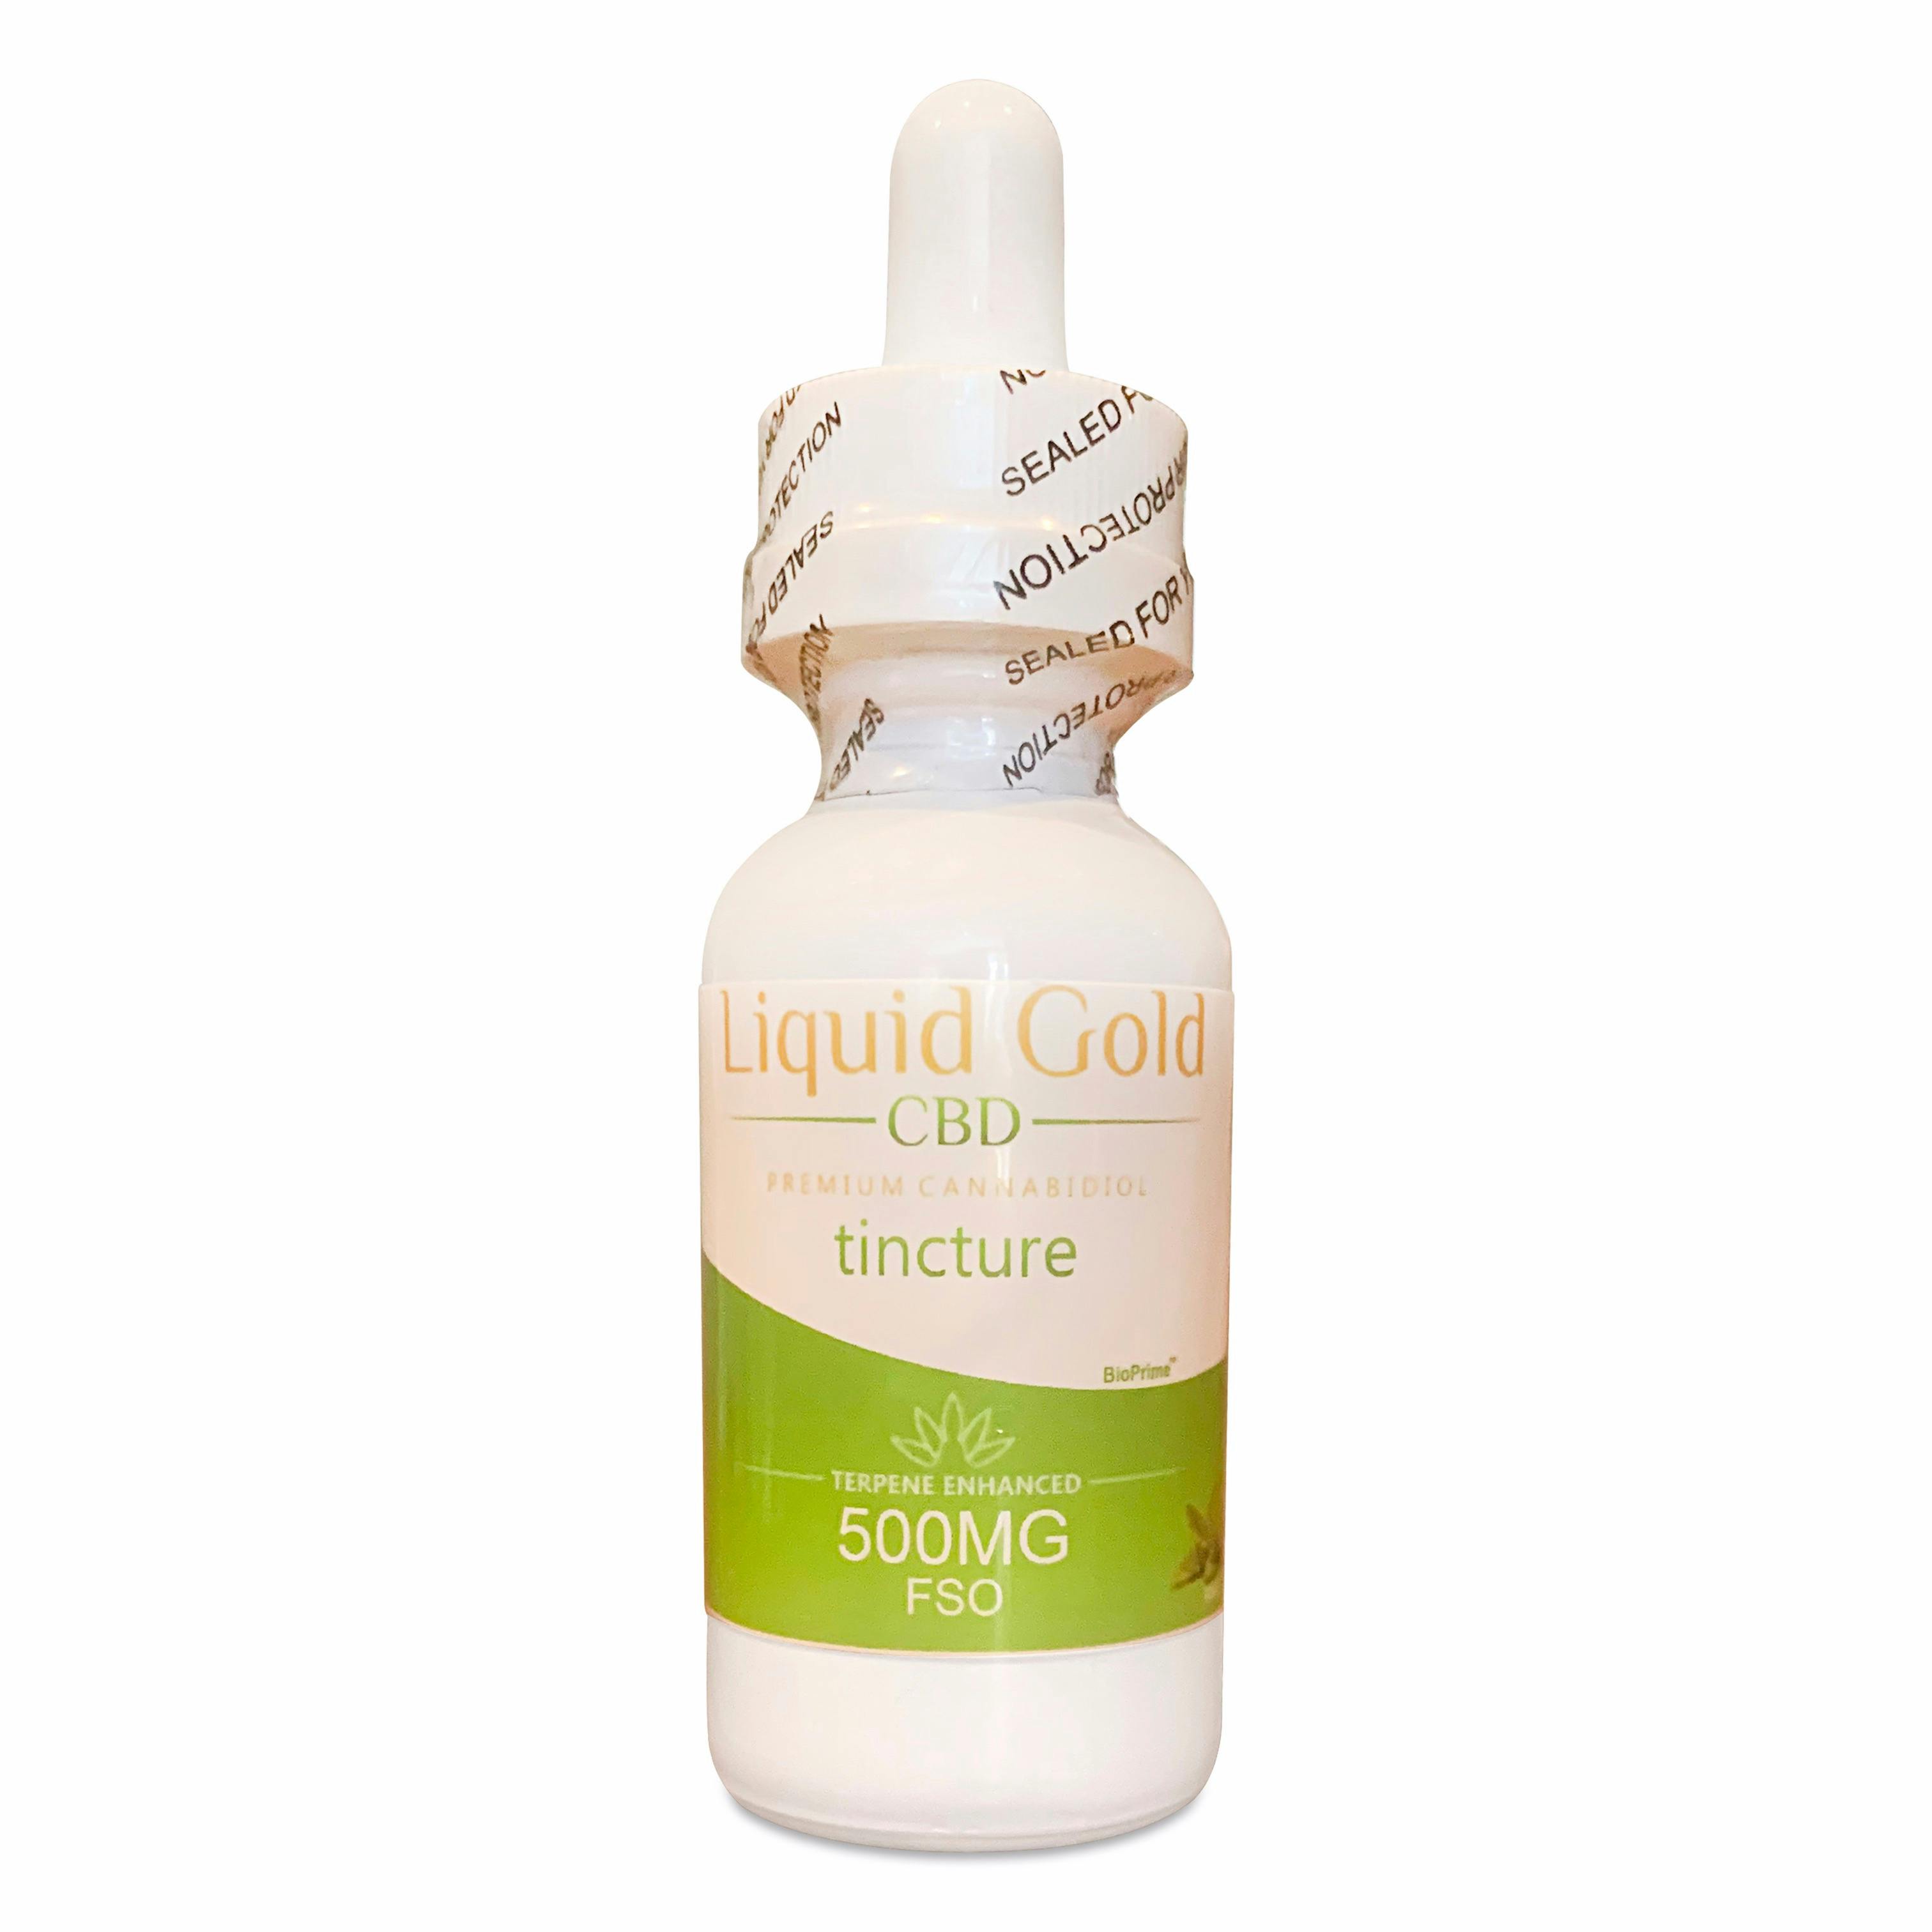 Liquid gold products cbd